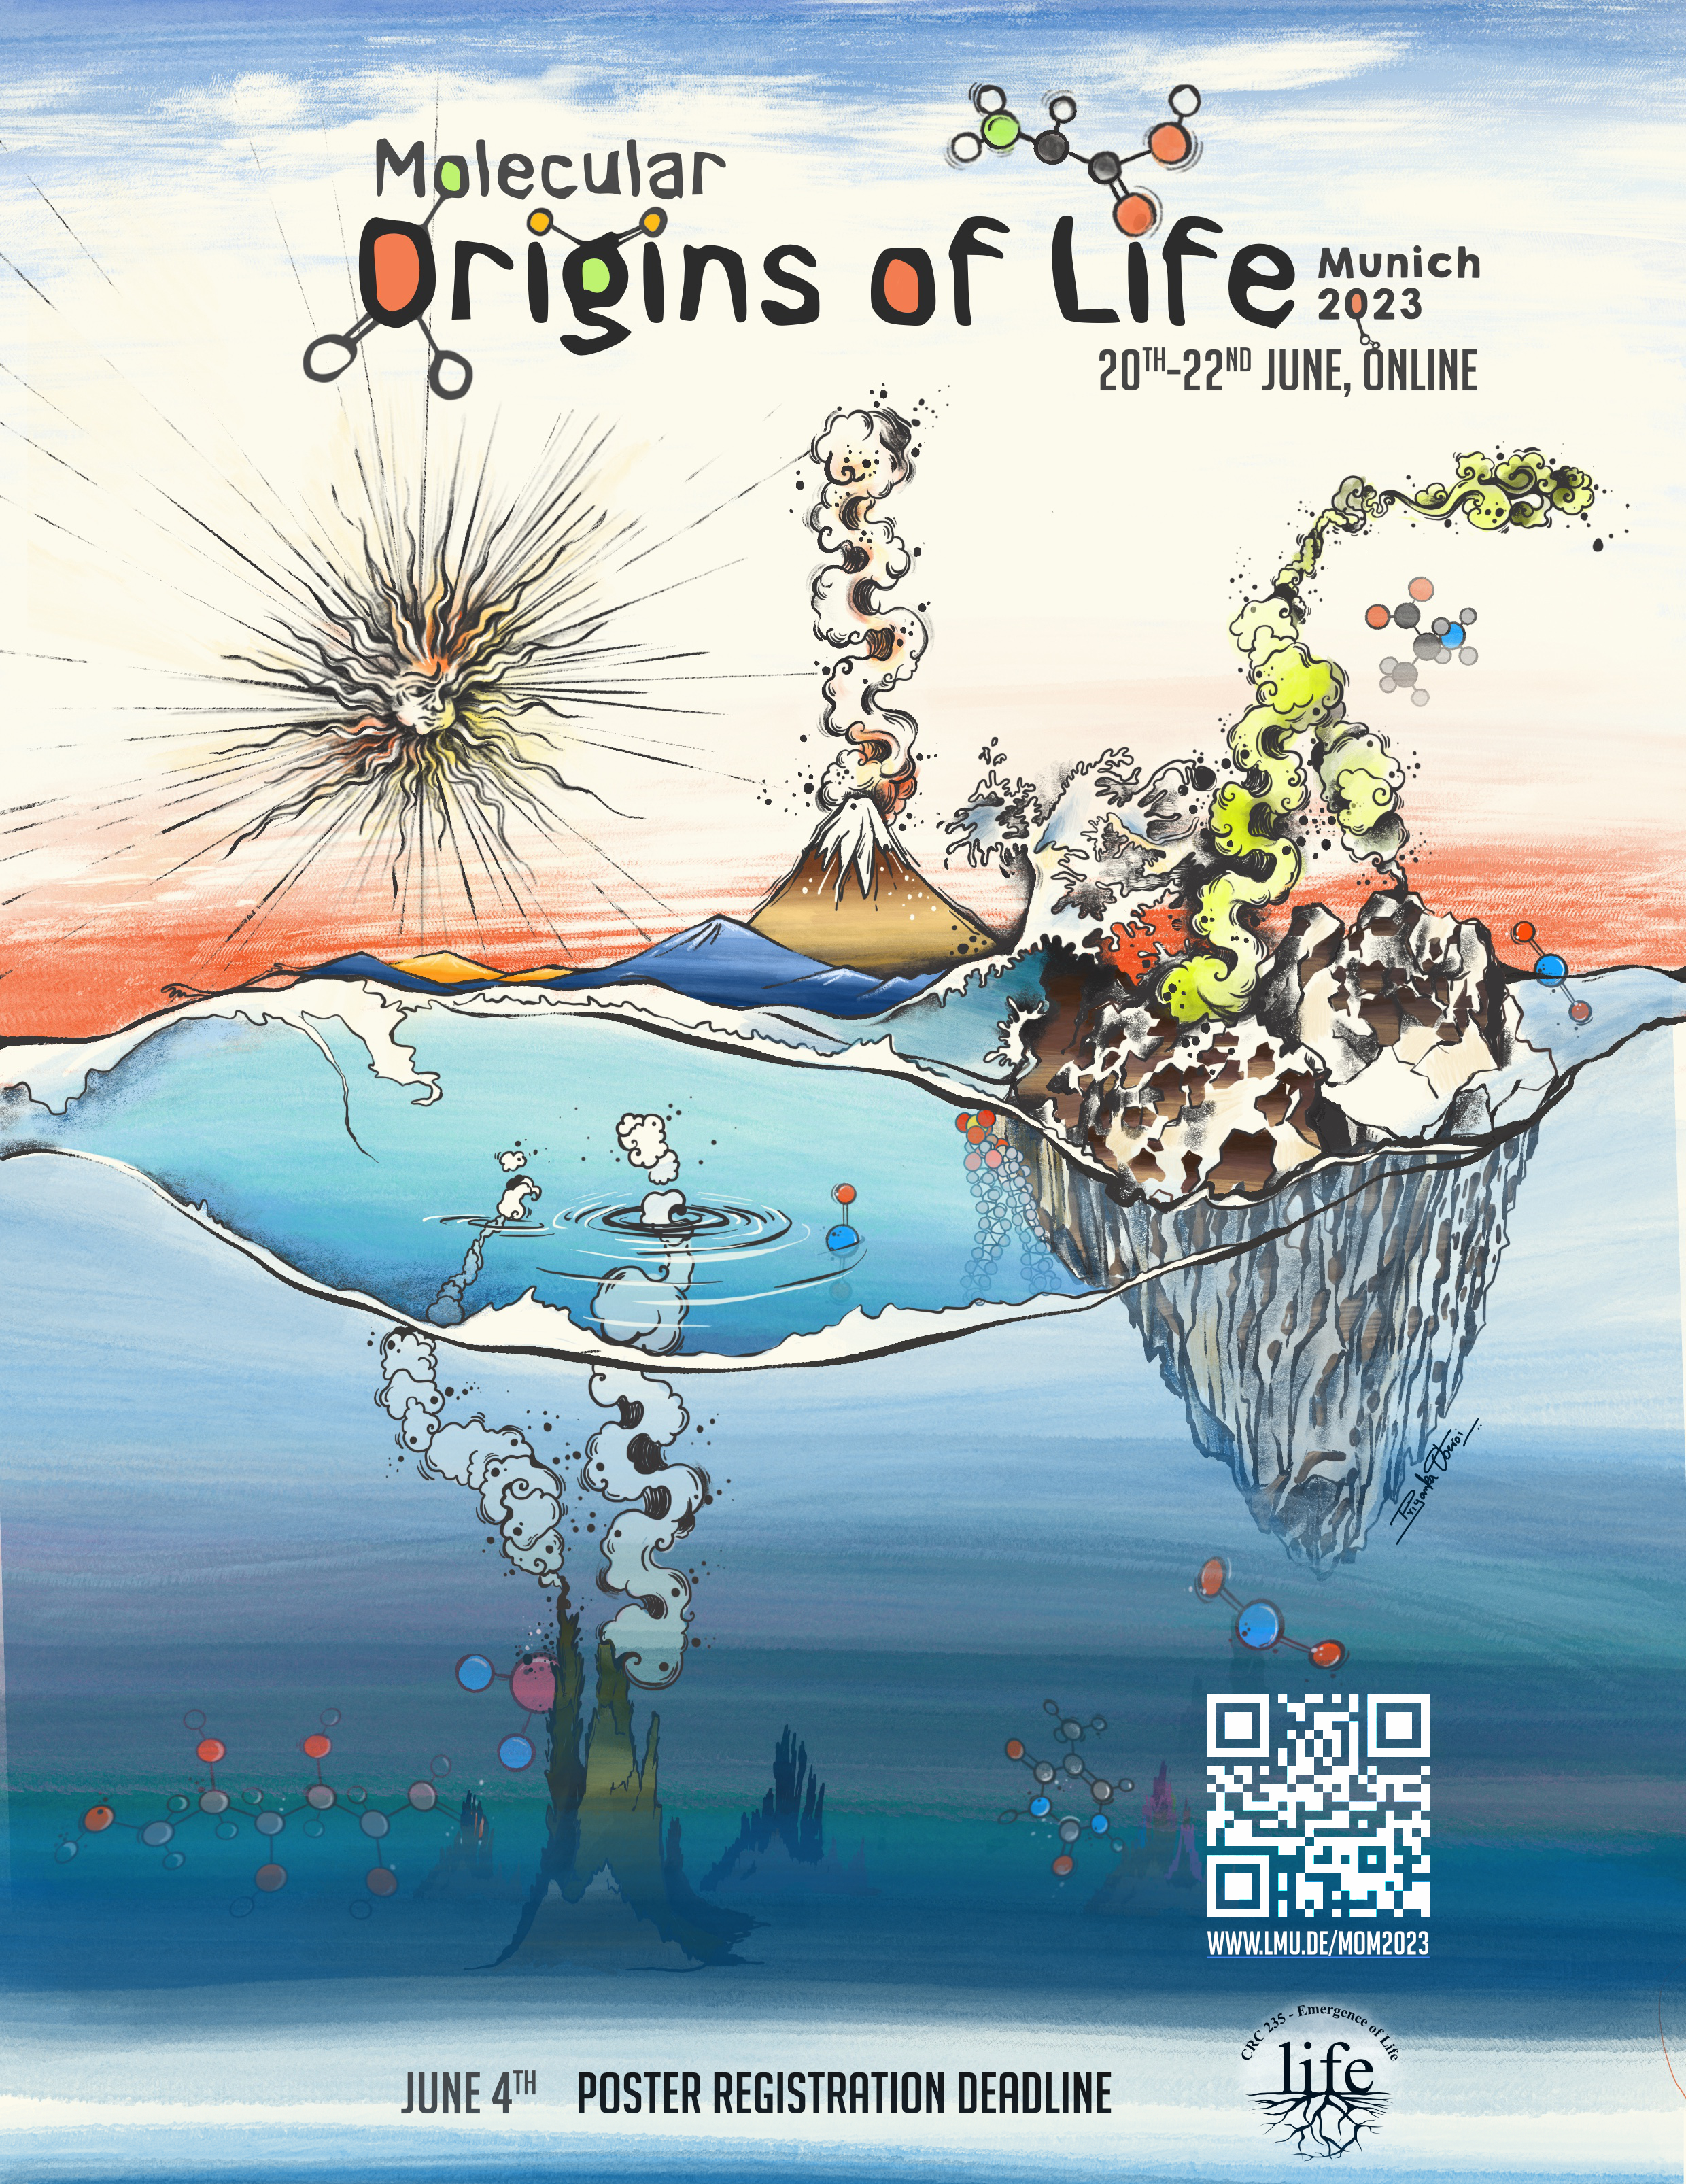 CRC 235 Conference: Molecular Origins of Life, Munich 2023 